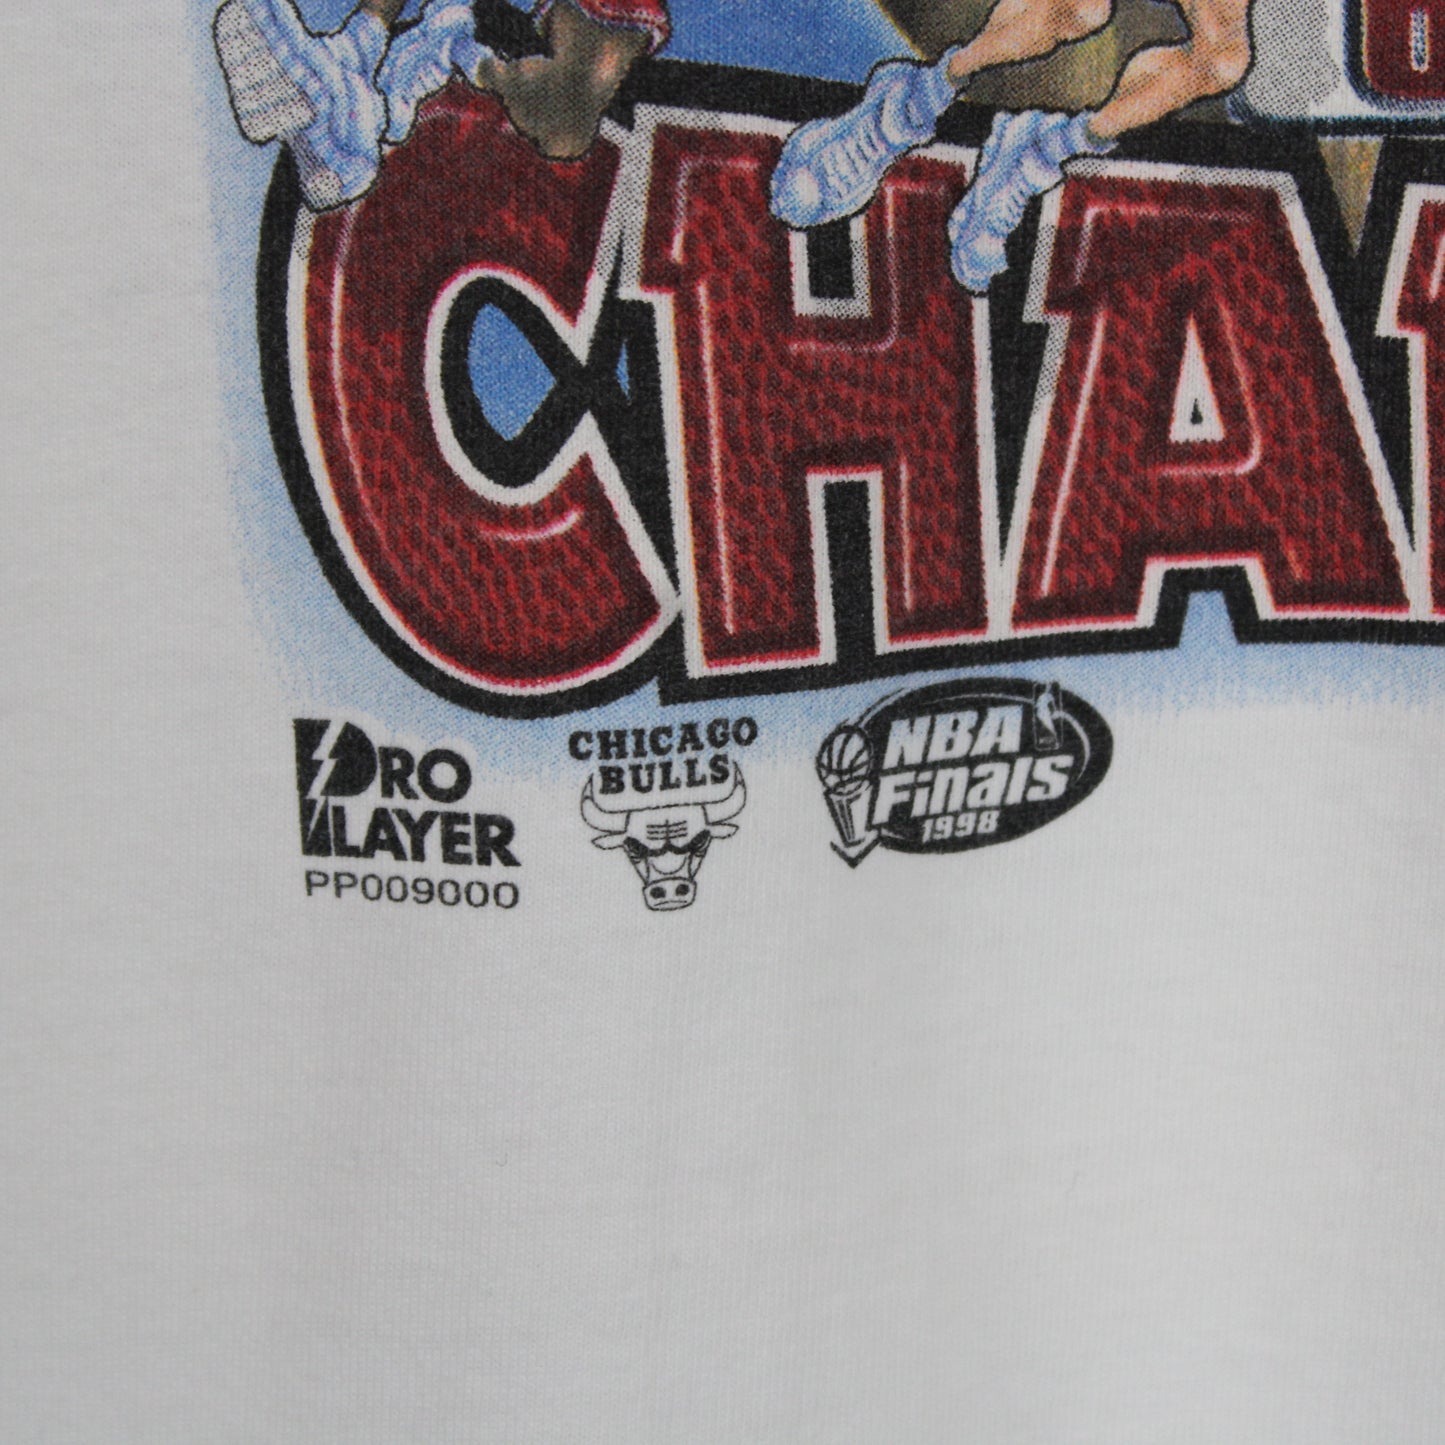 Vintage 1998 Chicago Bulls NBA Champions Tee - L